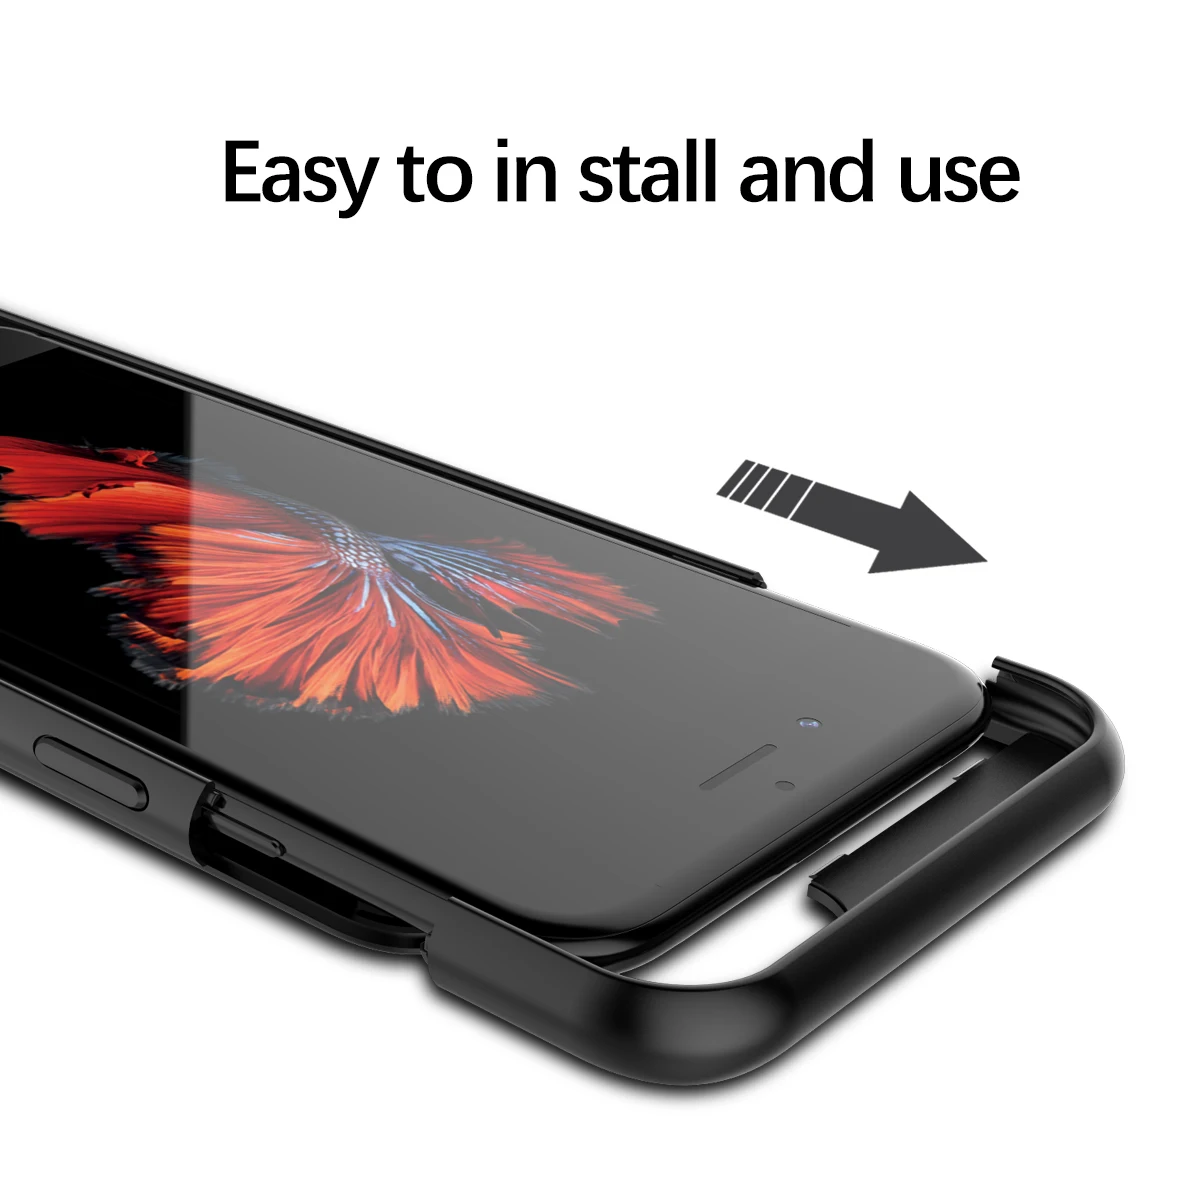 Torubia Батарея Зарядное устройство чехол для 4,7 дюйма iPhone 6 6s 7 8 чехол 4000 мА/ч, Мощность банк Батарея зарядки Зарядное устройство чехол для iPhone 5 5S